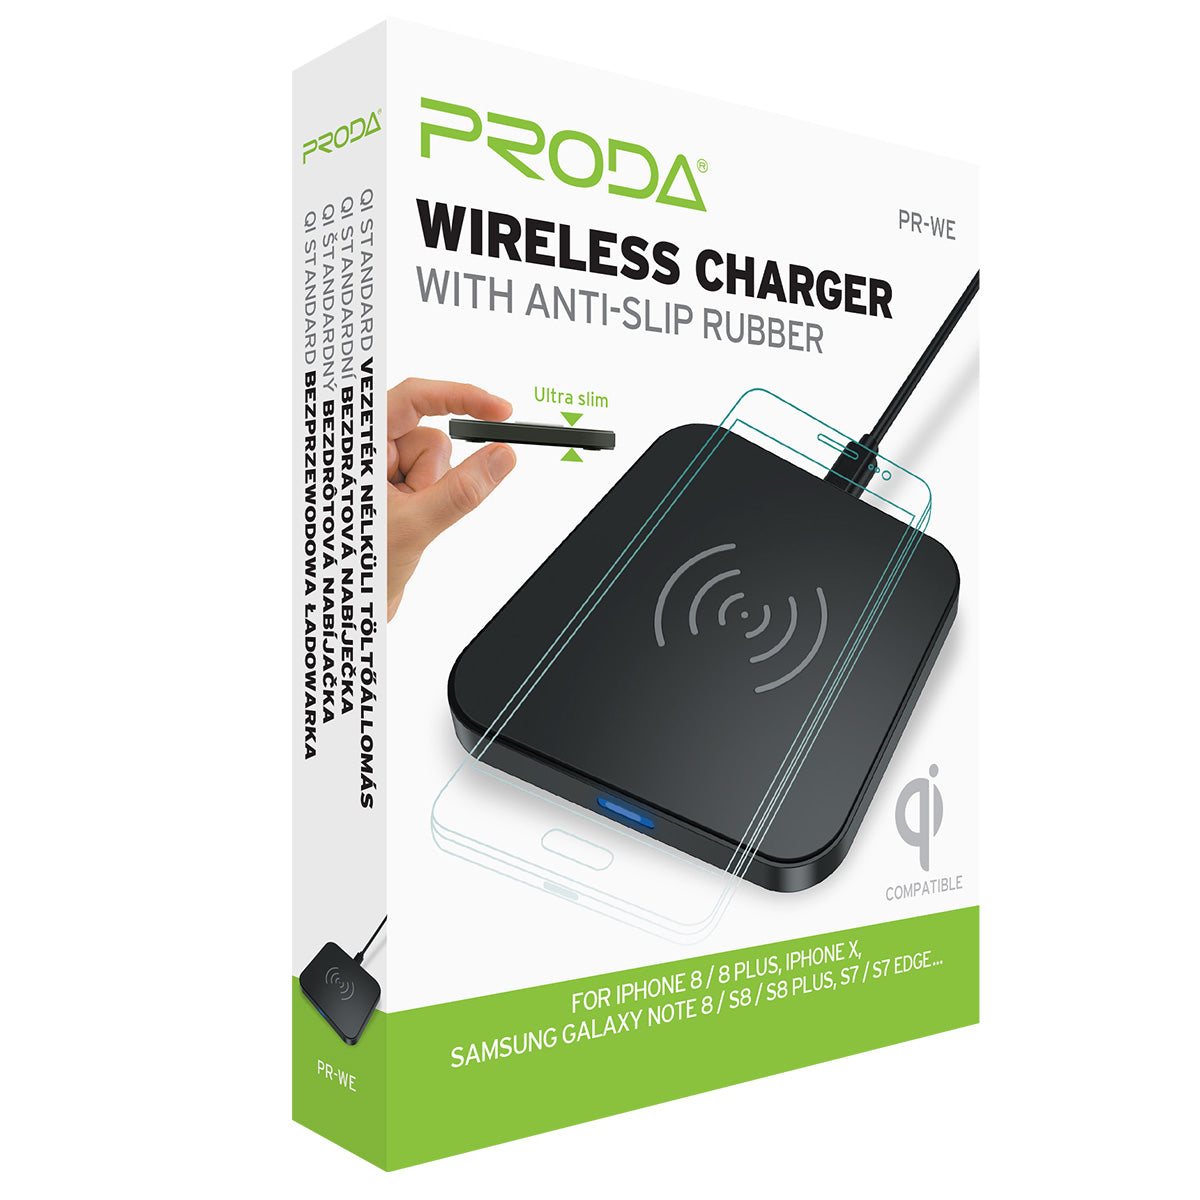 Proda PR-WE vezeték nélküli telefontöltő dobozban